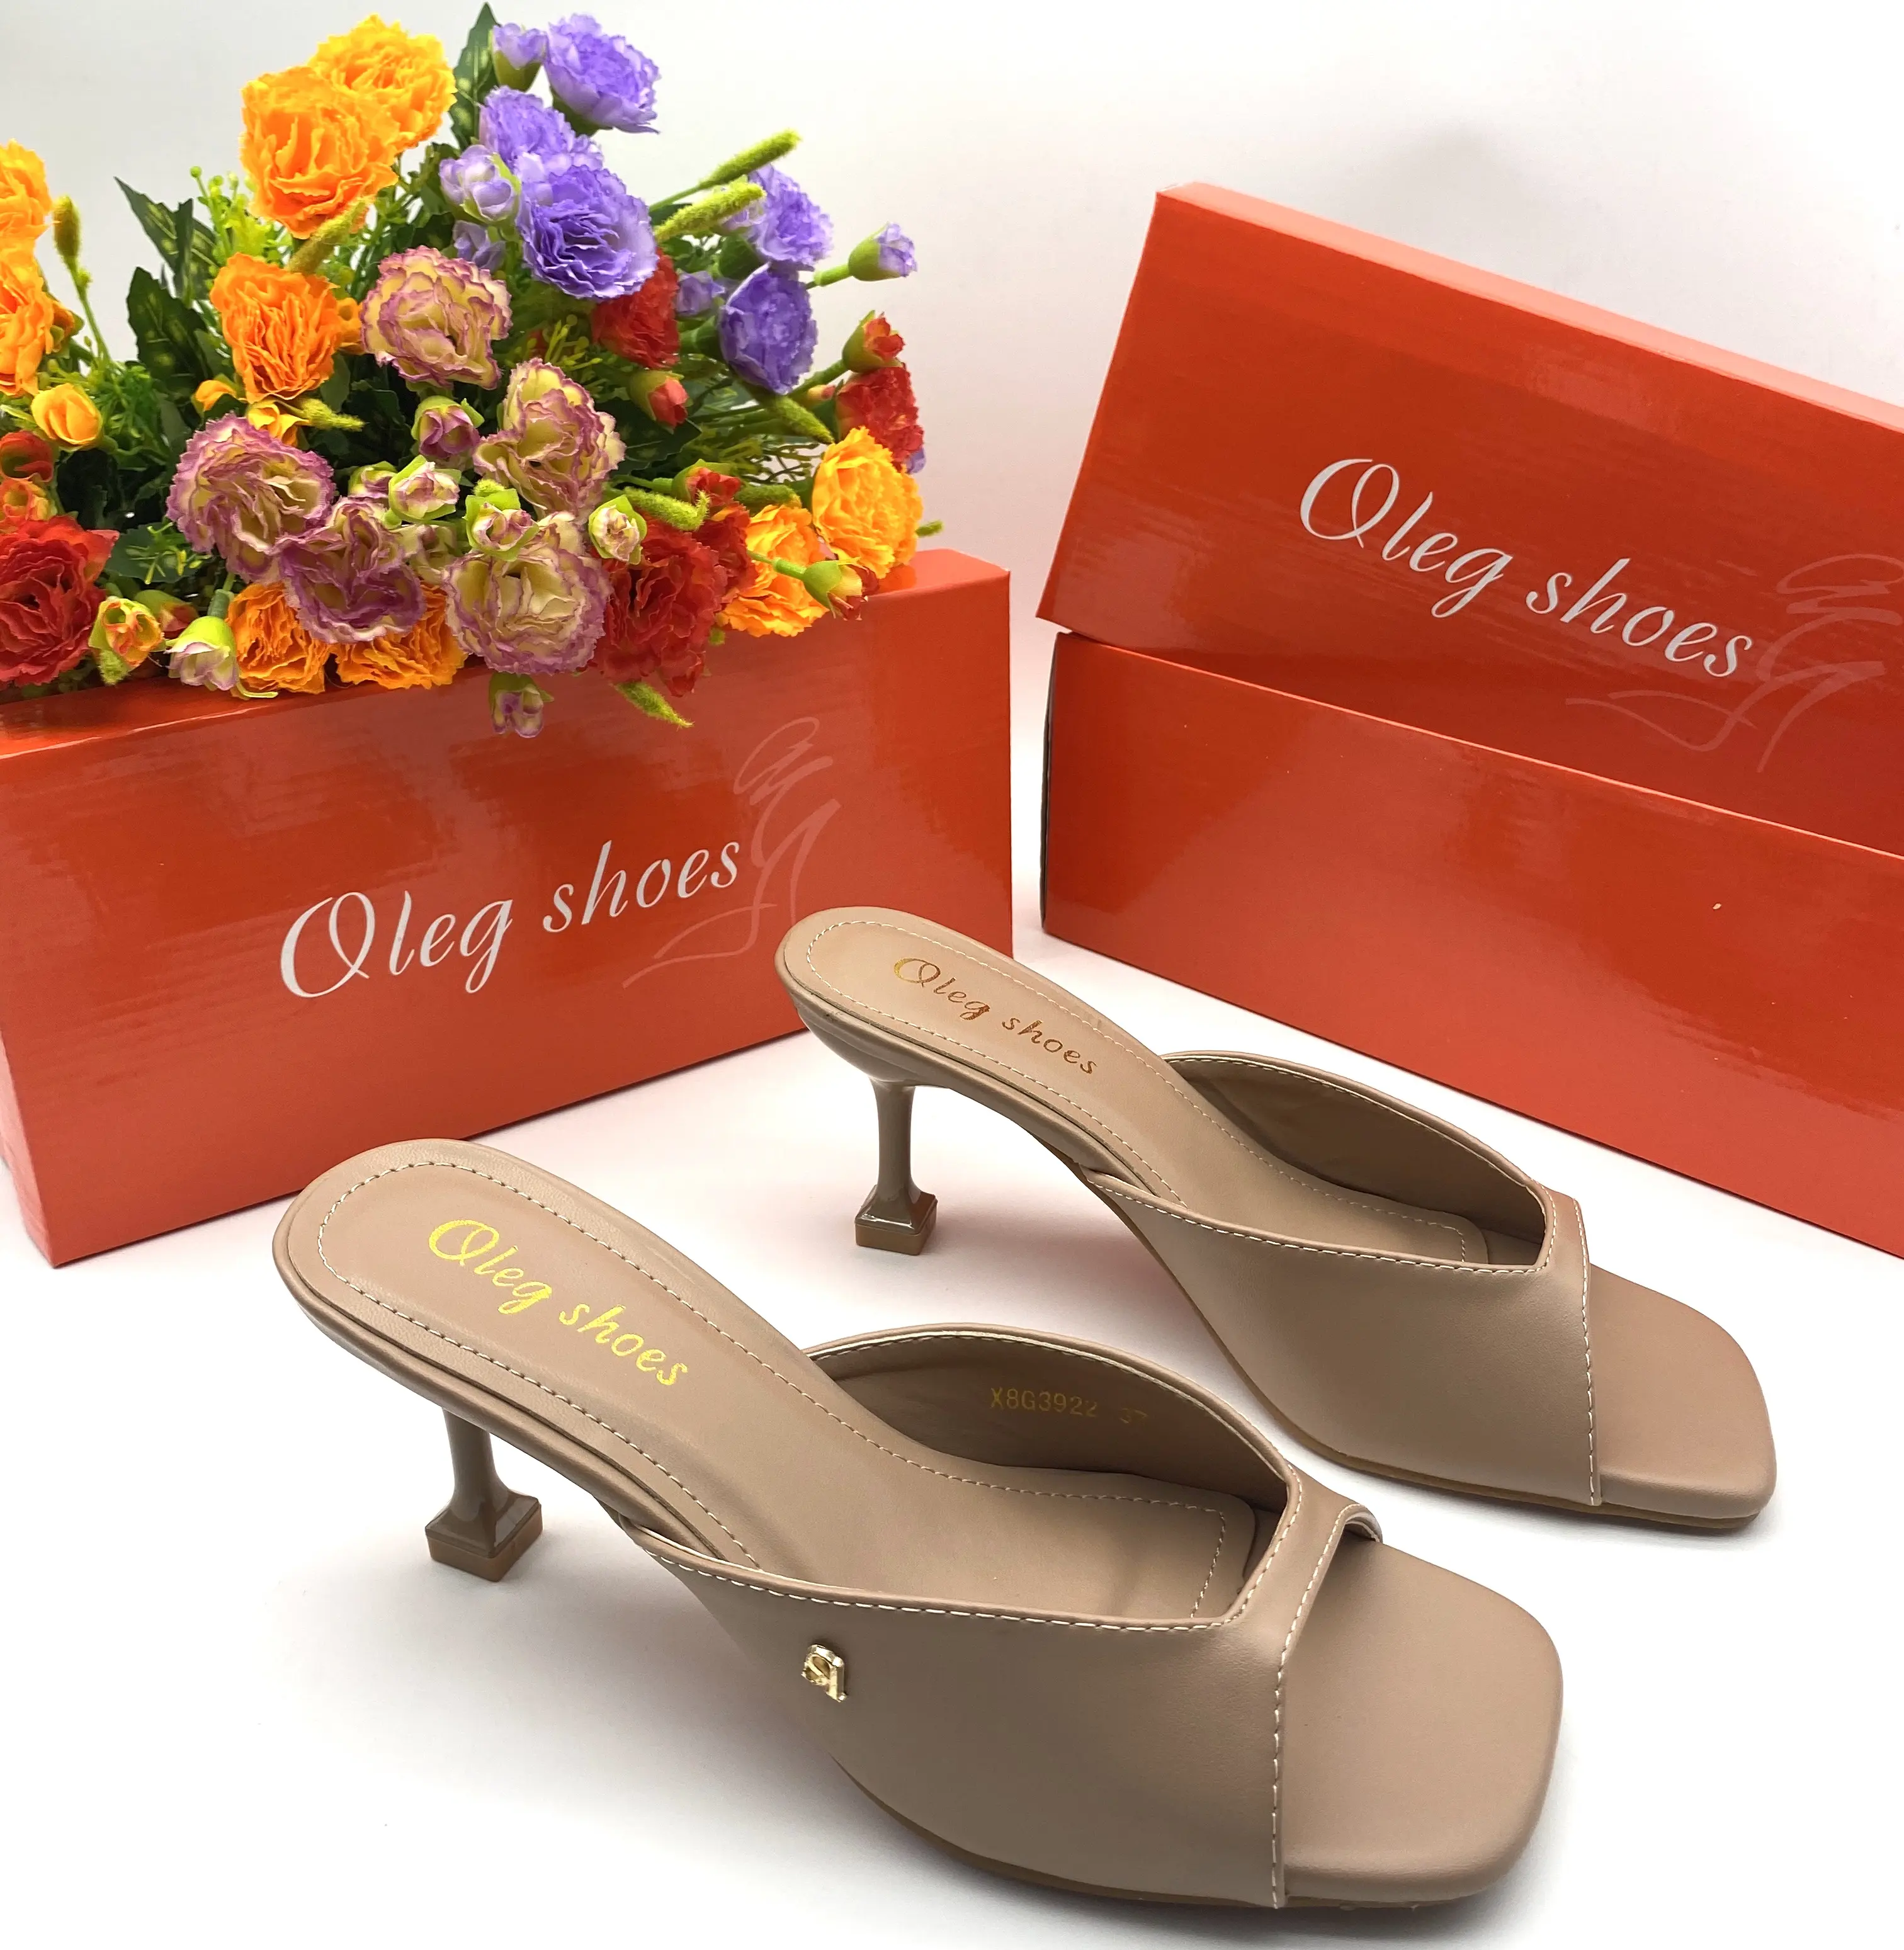 Olegshoes Fashion Women high heel Sandals, Open Toe Pump Heel Sandals Elegant Ladies Summer Dress Sandal for Wedding, Party,